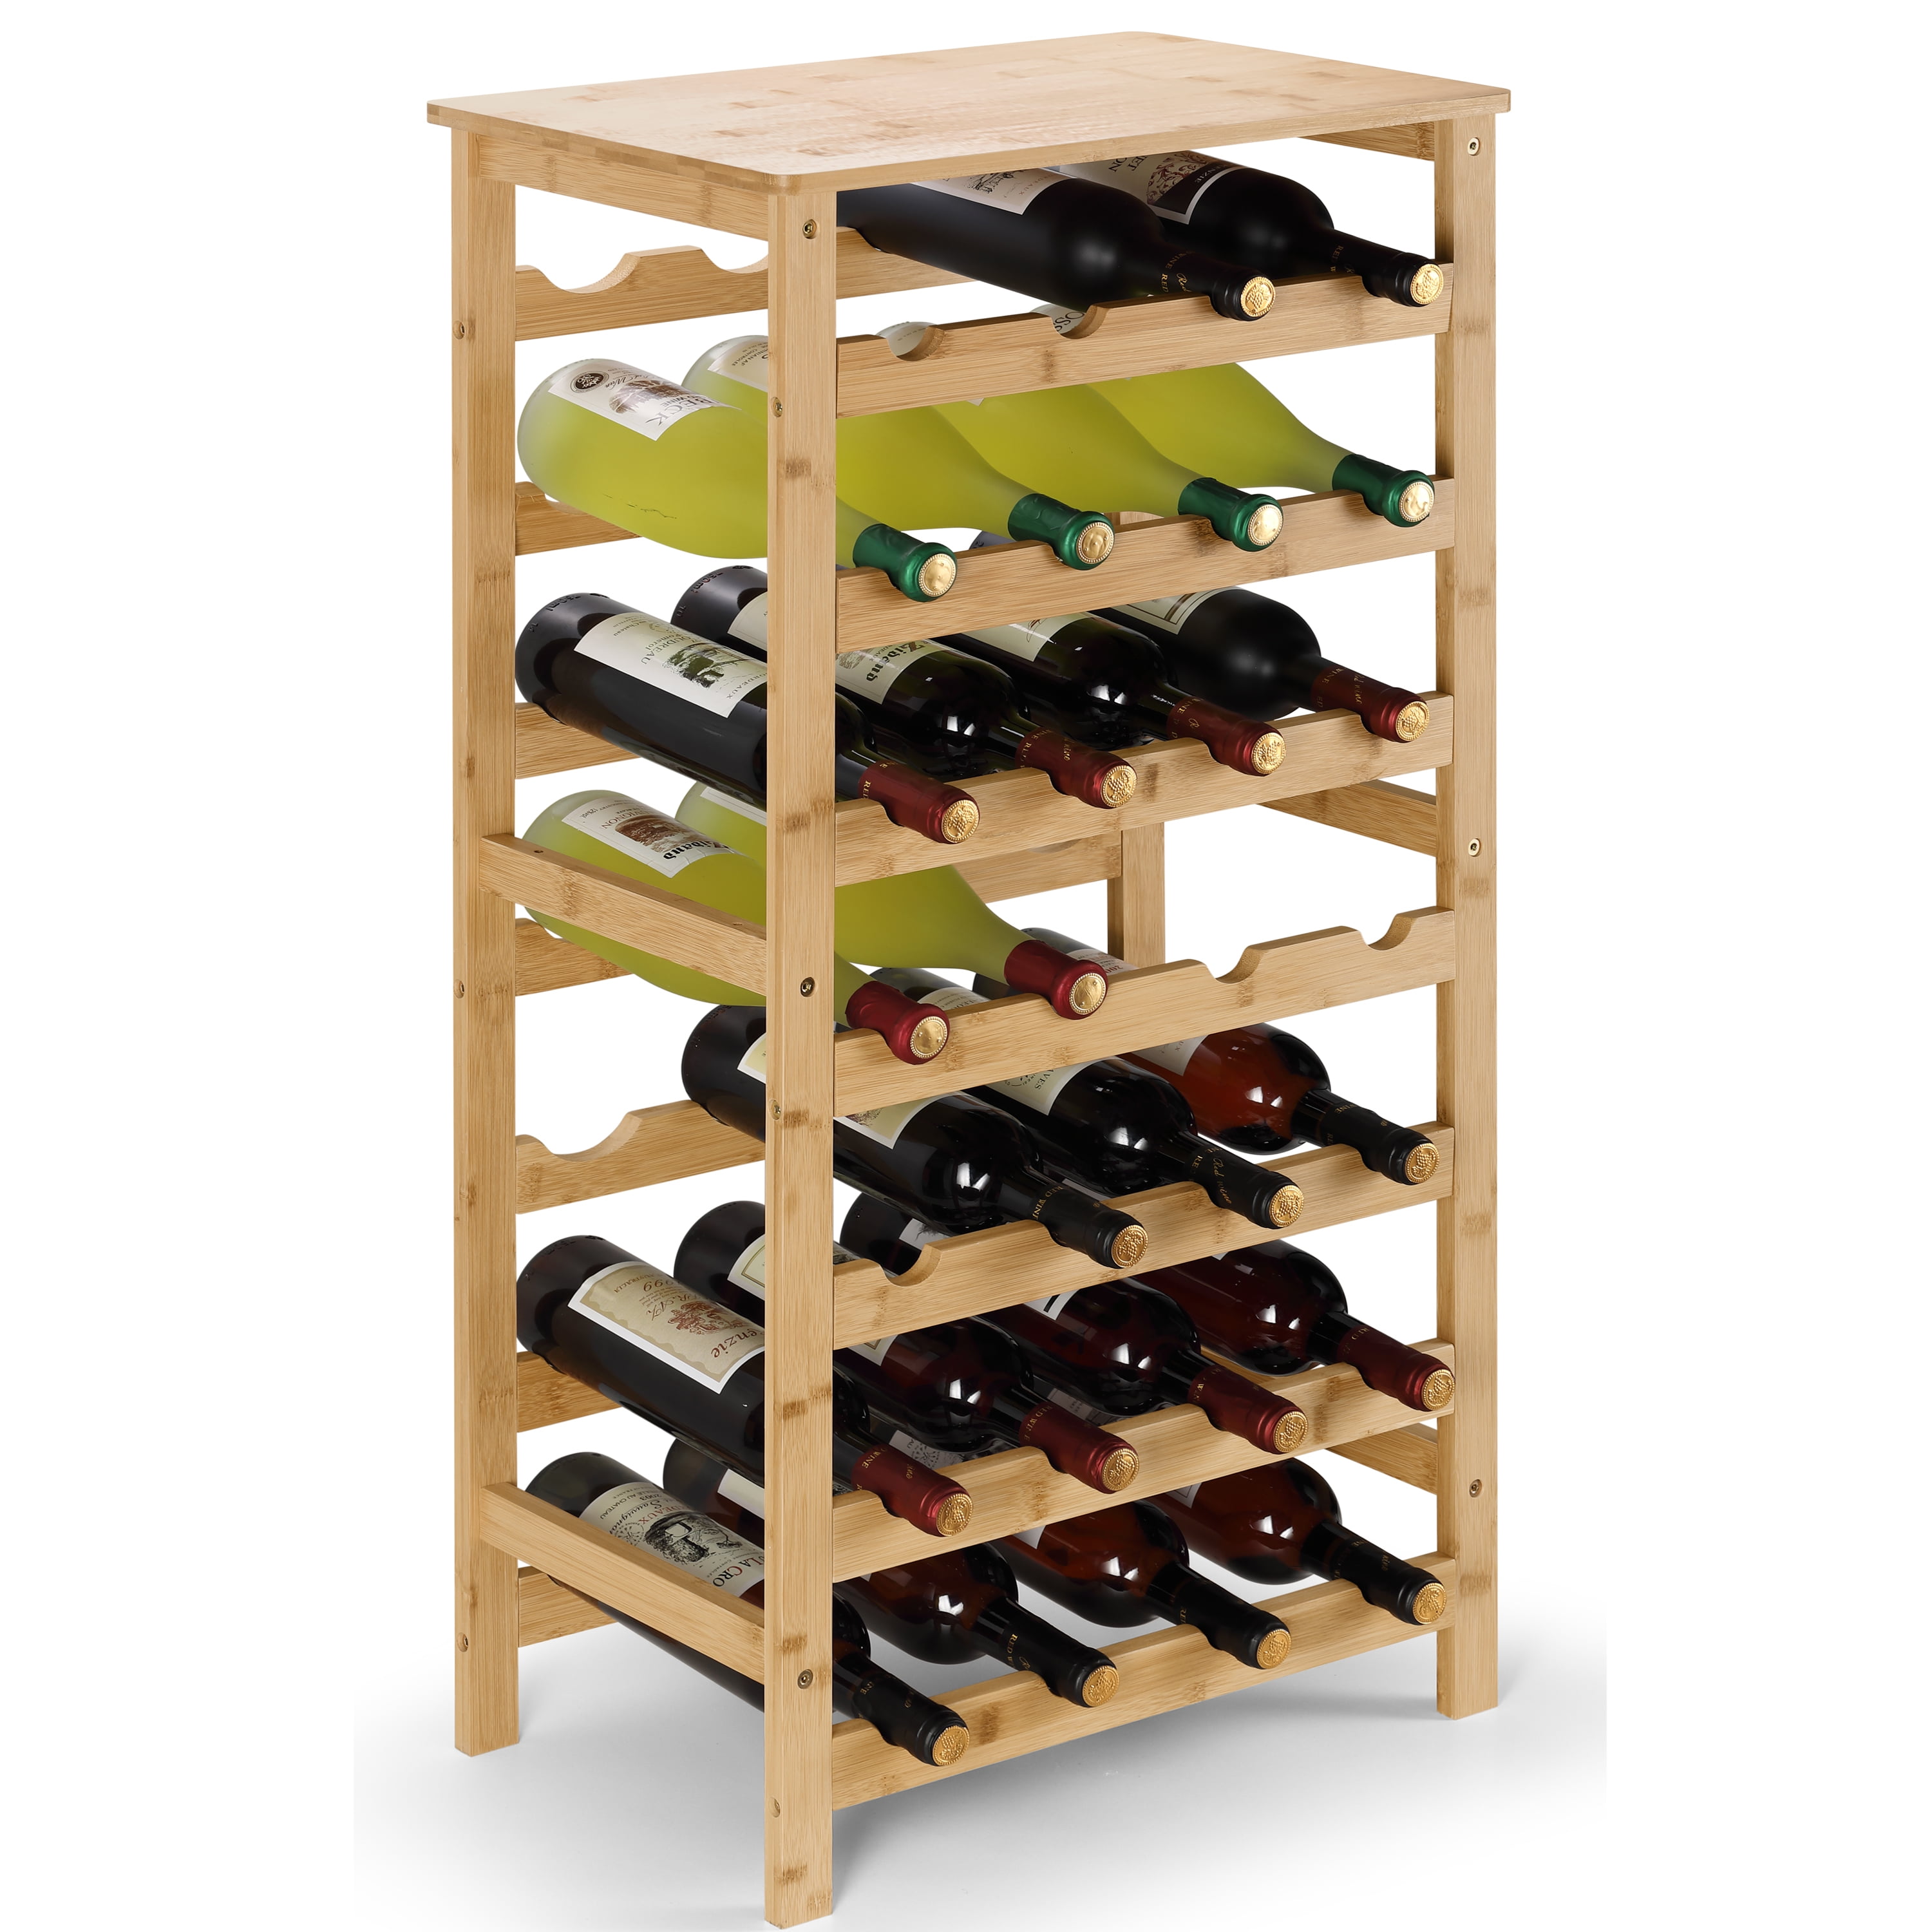 Kinsuite 7-Tiers Wine Rack for Storing 28 Bottles Free Standing Floor Bamboo Wine Storage Holder Display Shelves 